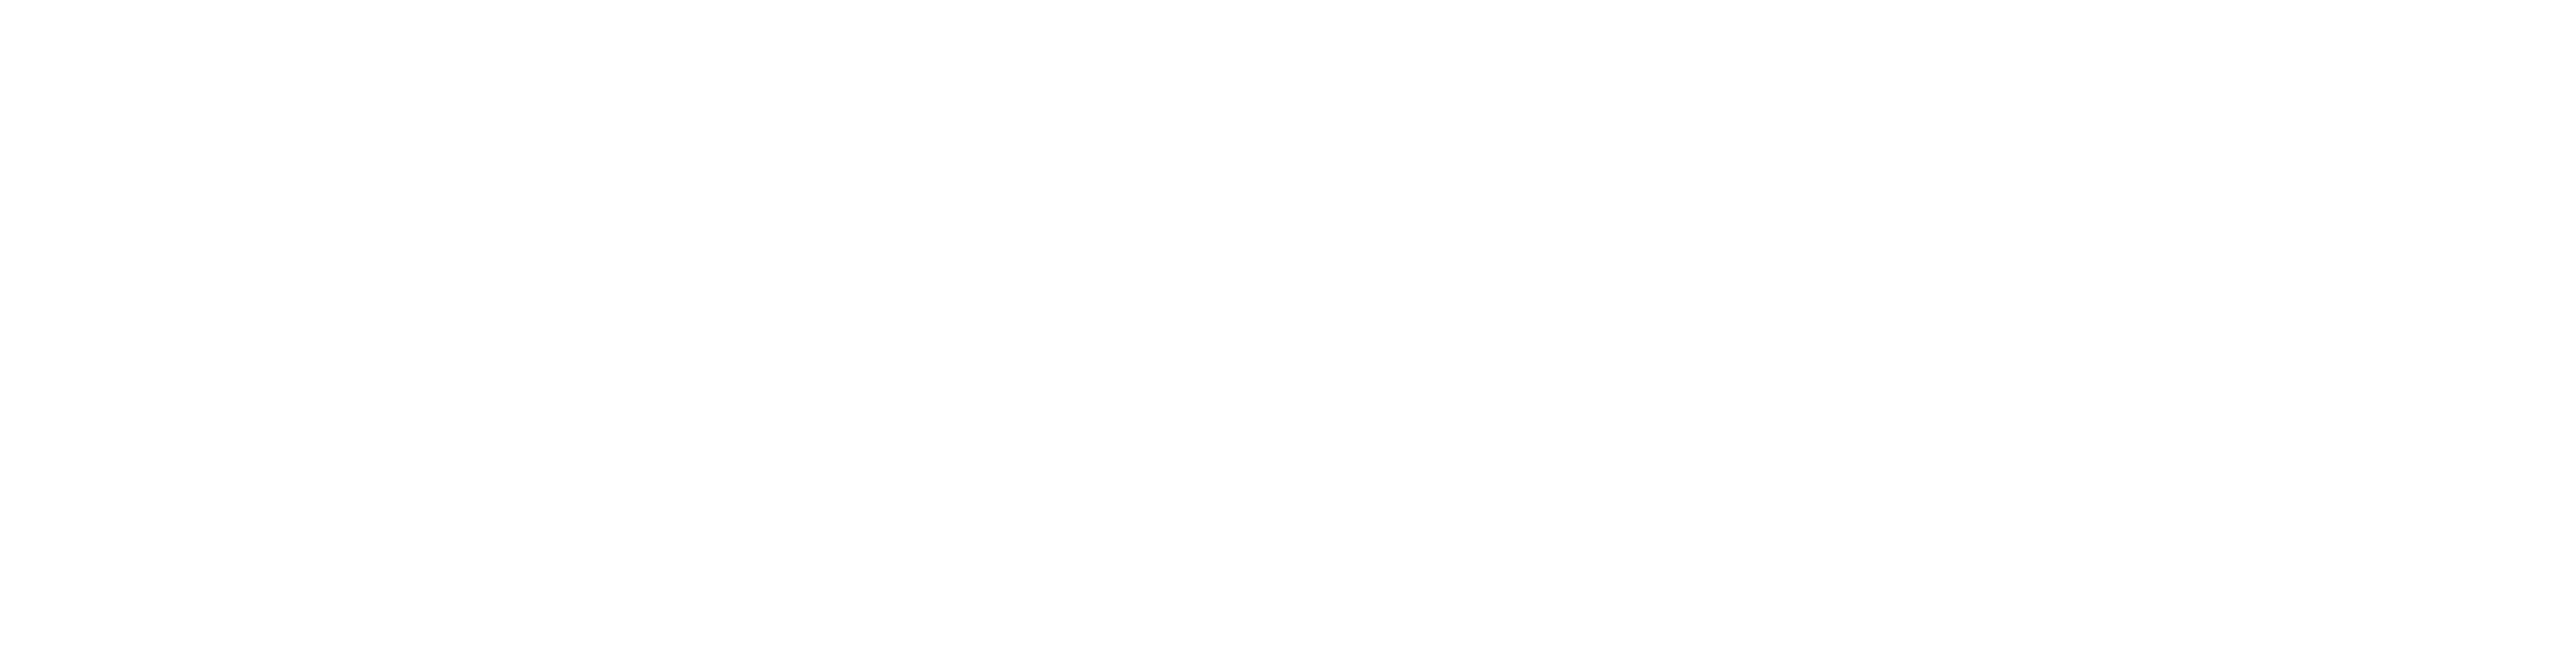 Postgraduate(su) Assembly Resources logo